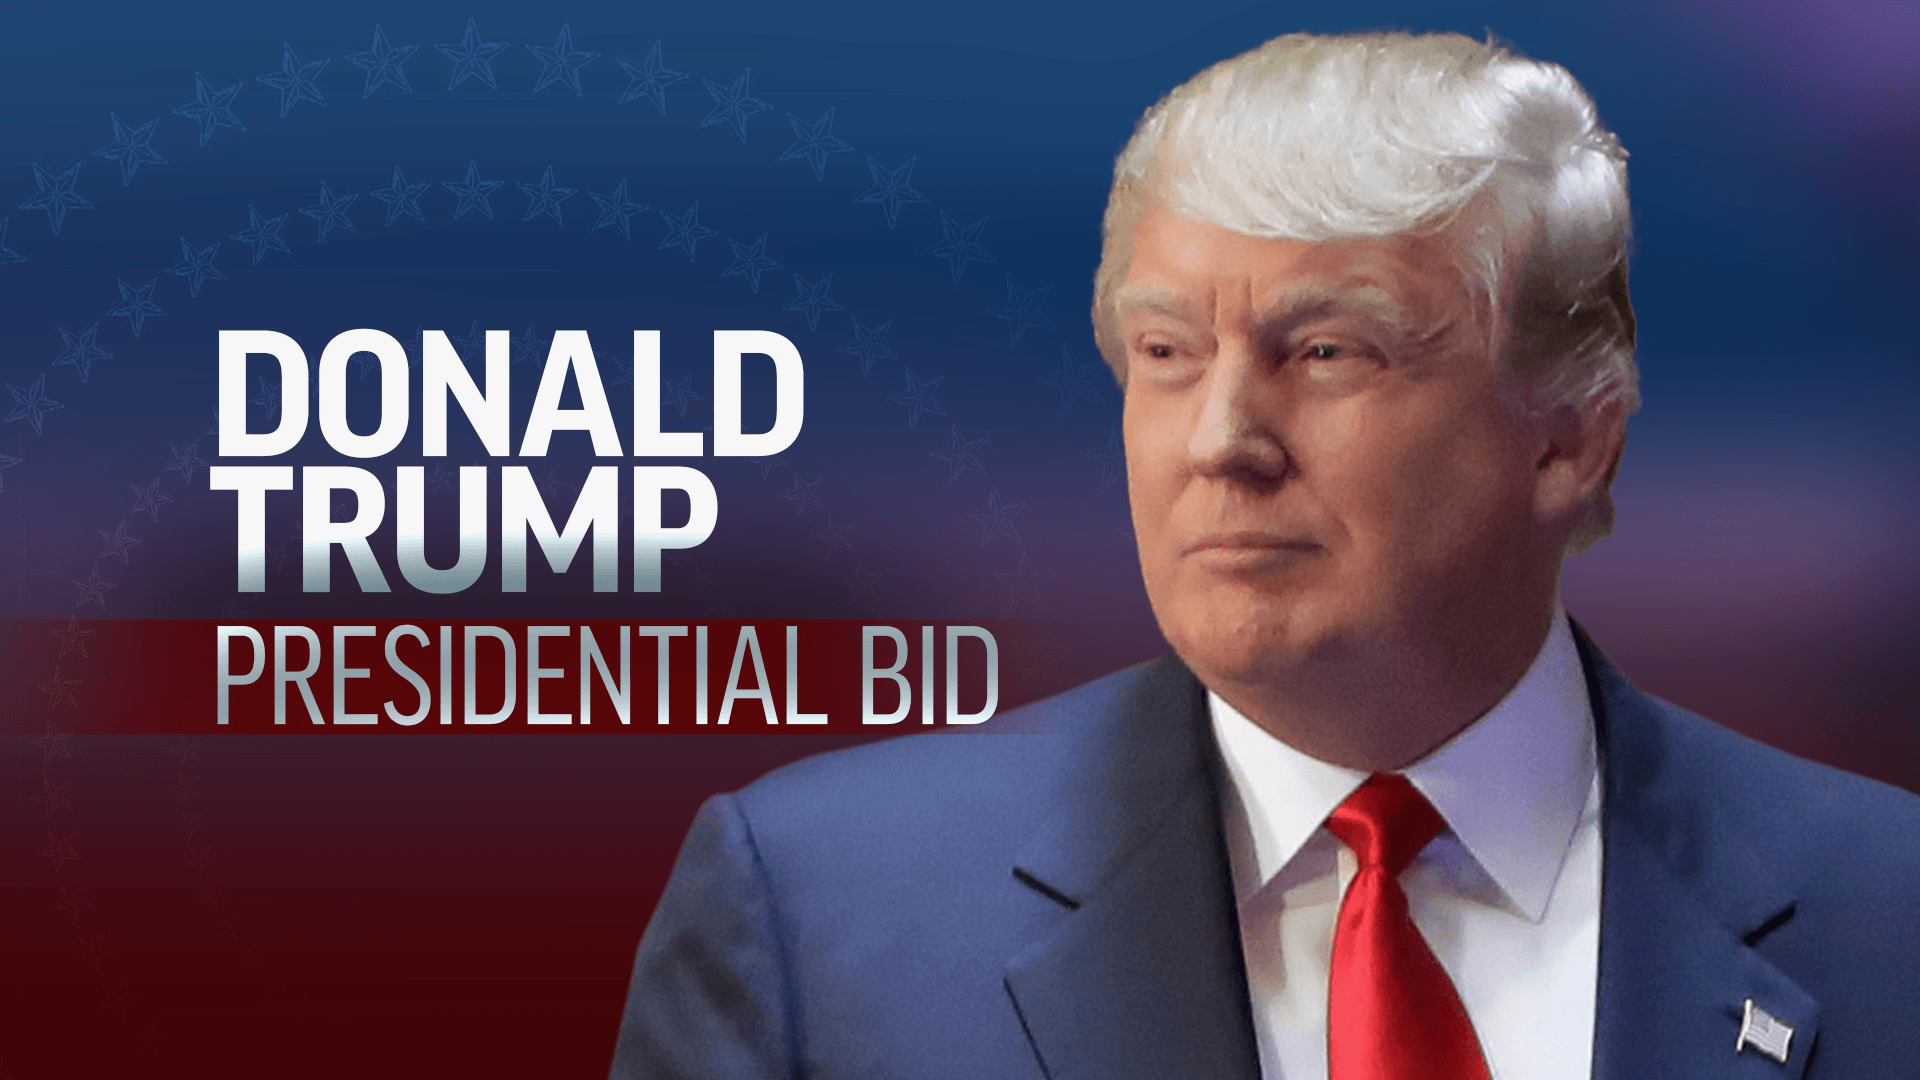 Donald Trump For President Wallpaper 1309.24 Kb